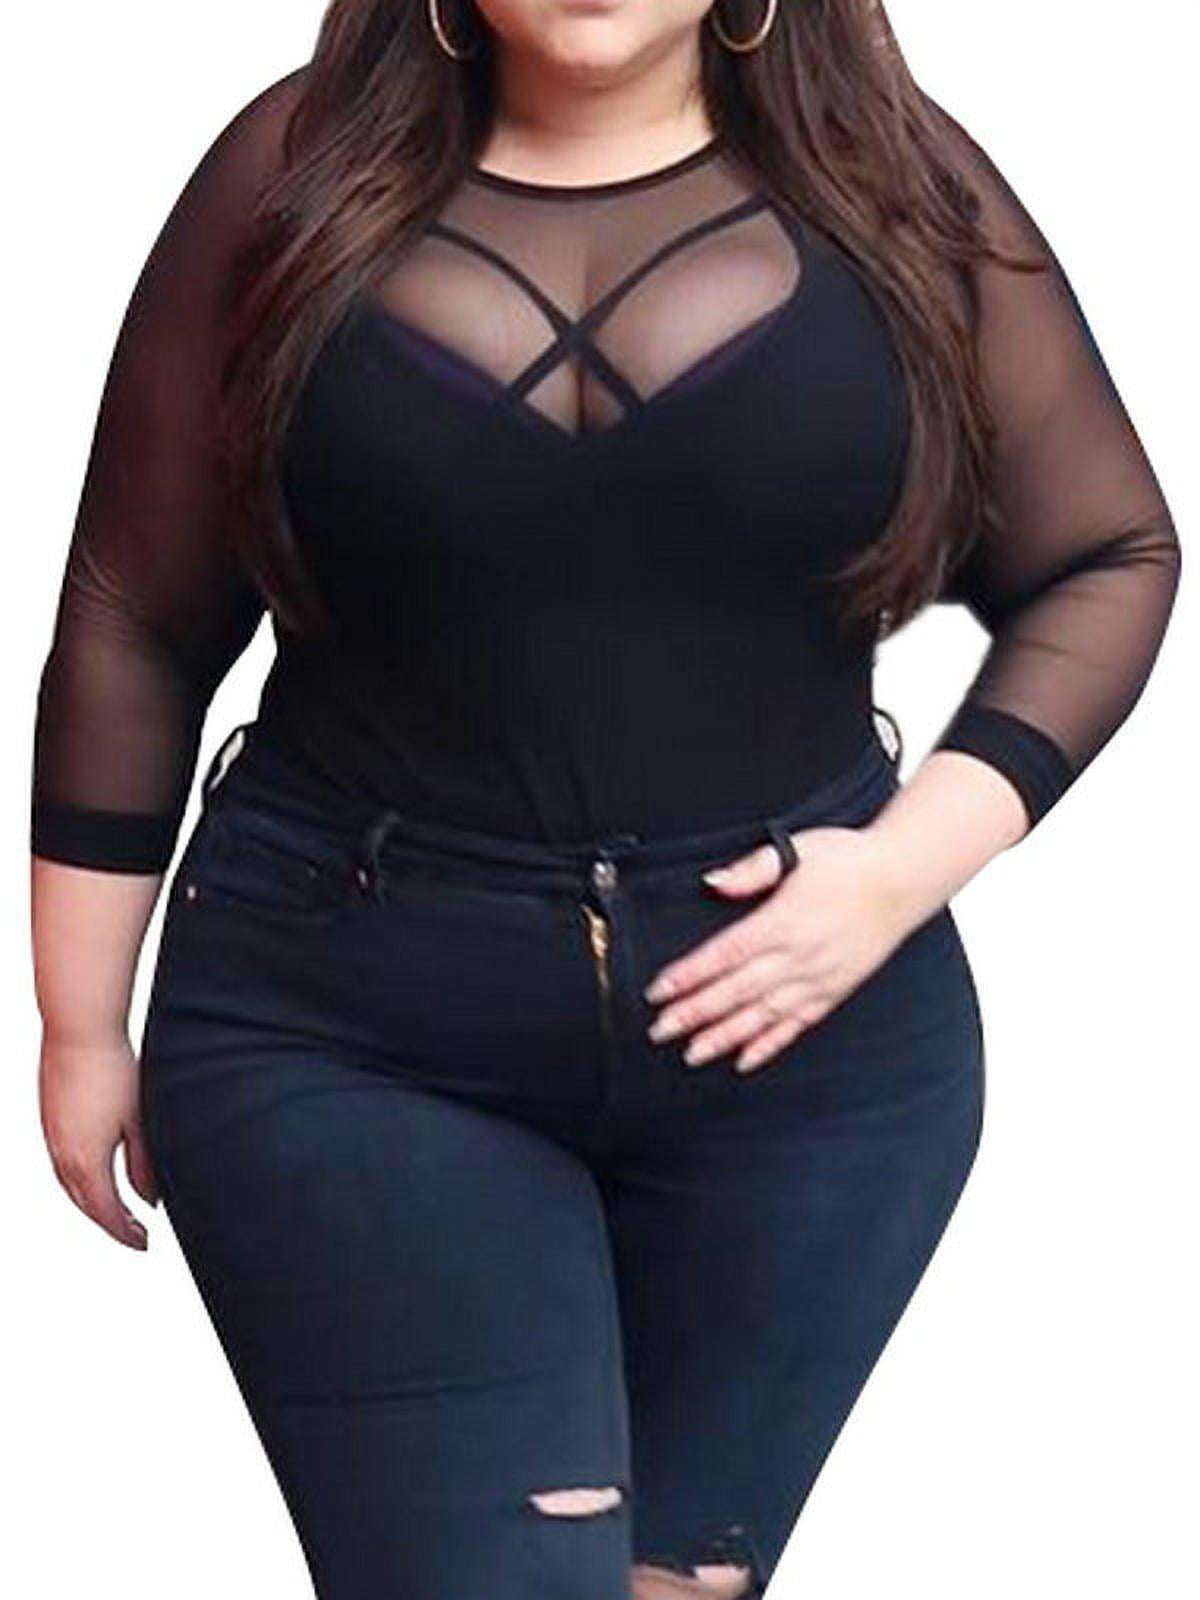 Scvgkk Women's Plus Size Sexy See Through Mesh Long Sleeve Blouse Tops 